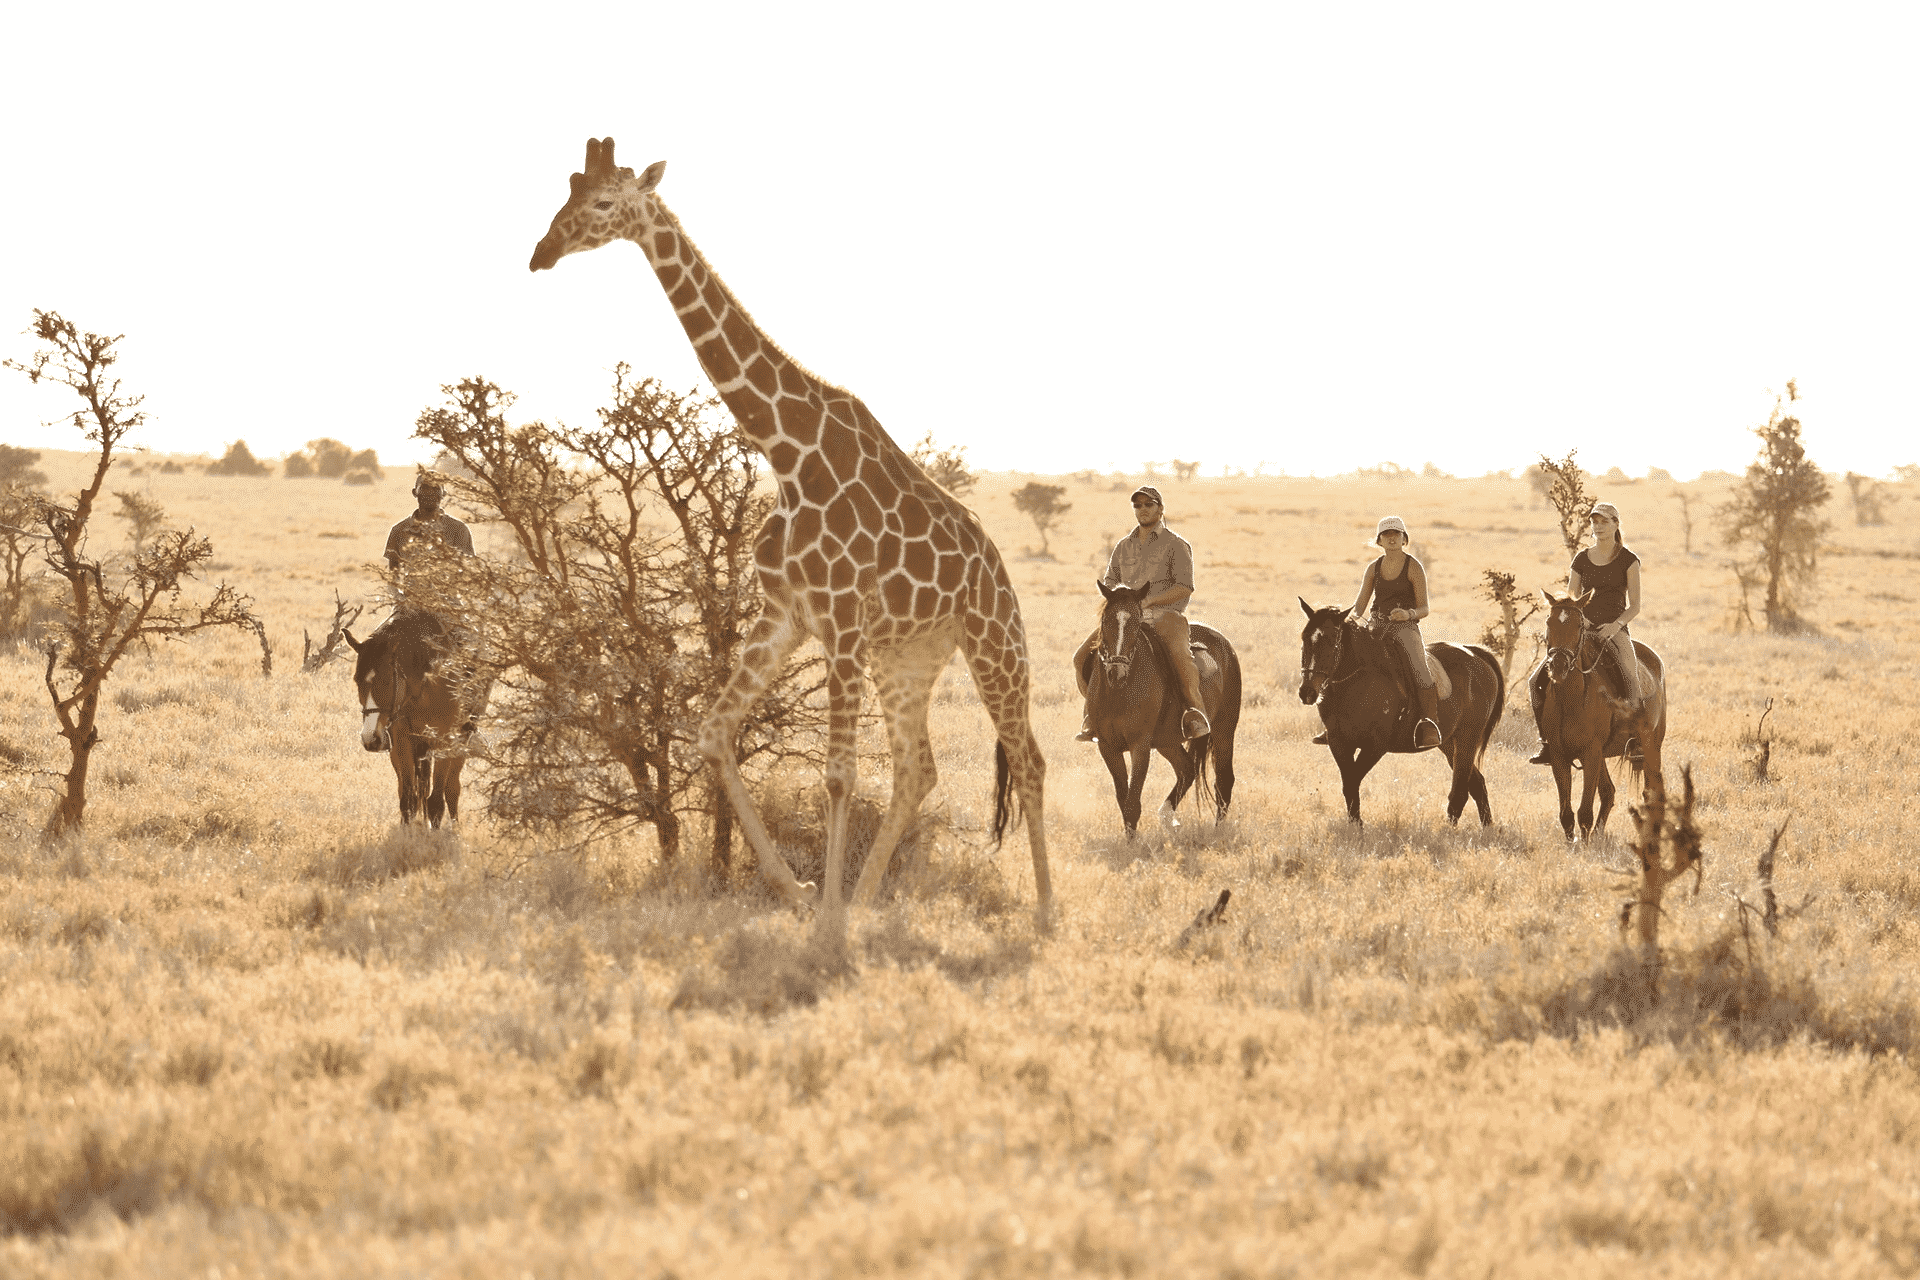 Guests see giraffe on a horseback safari in Kenya